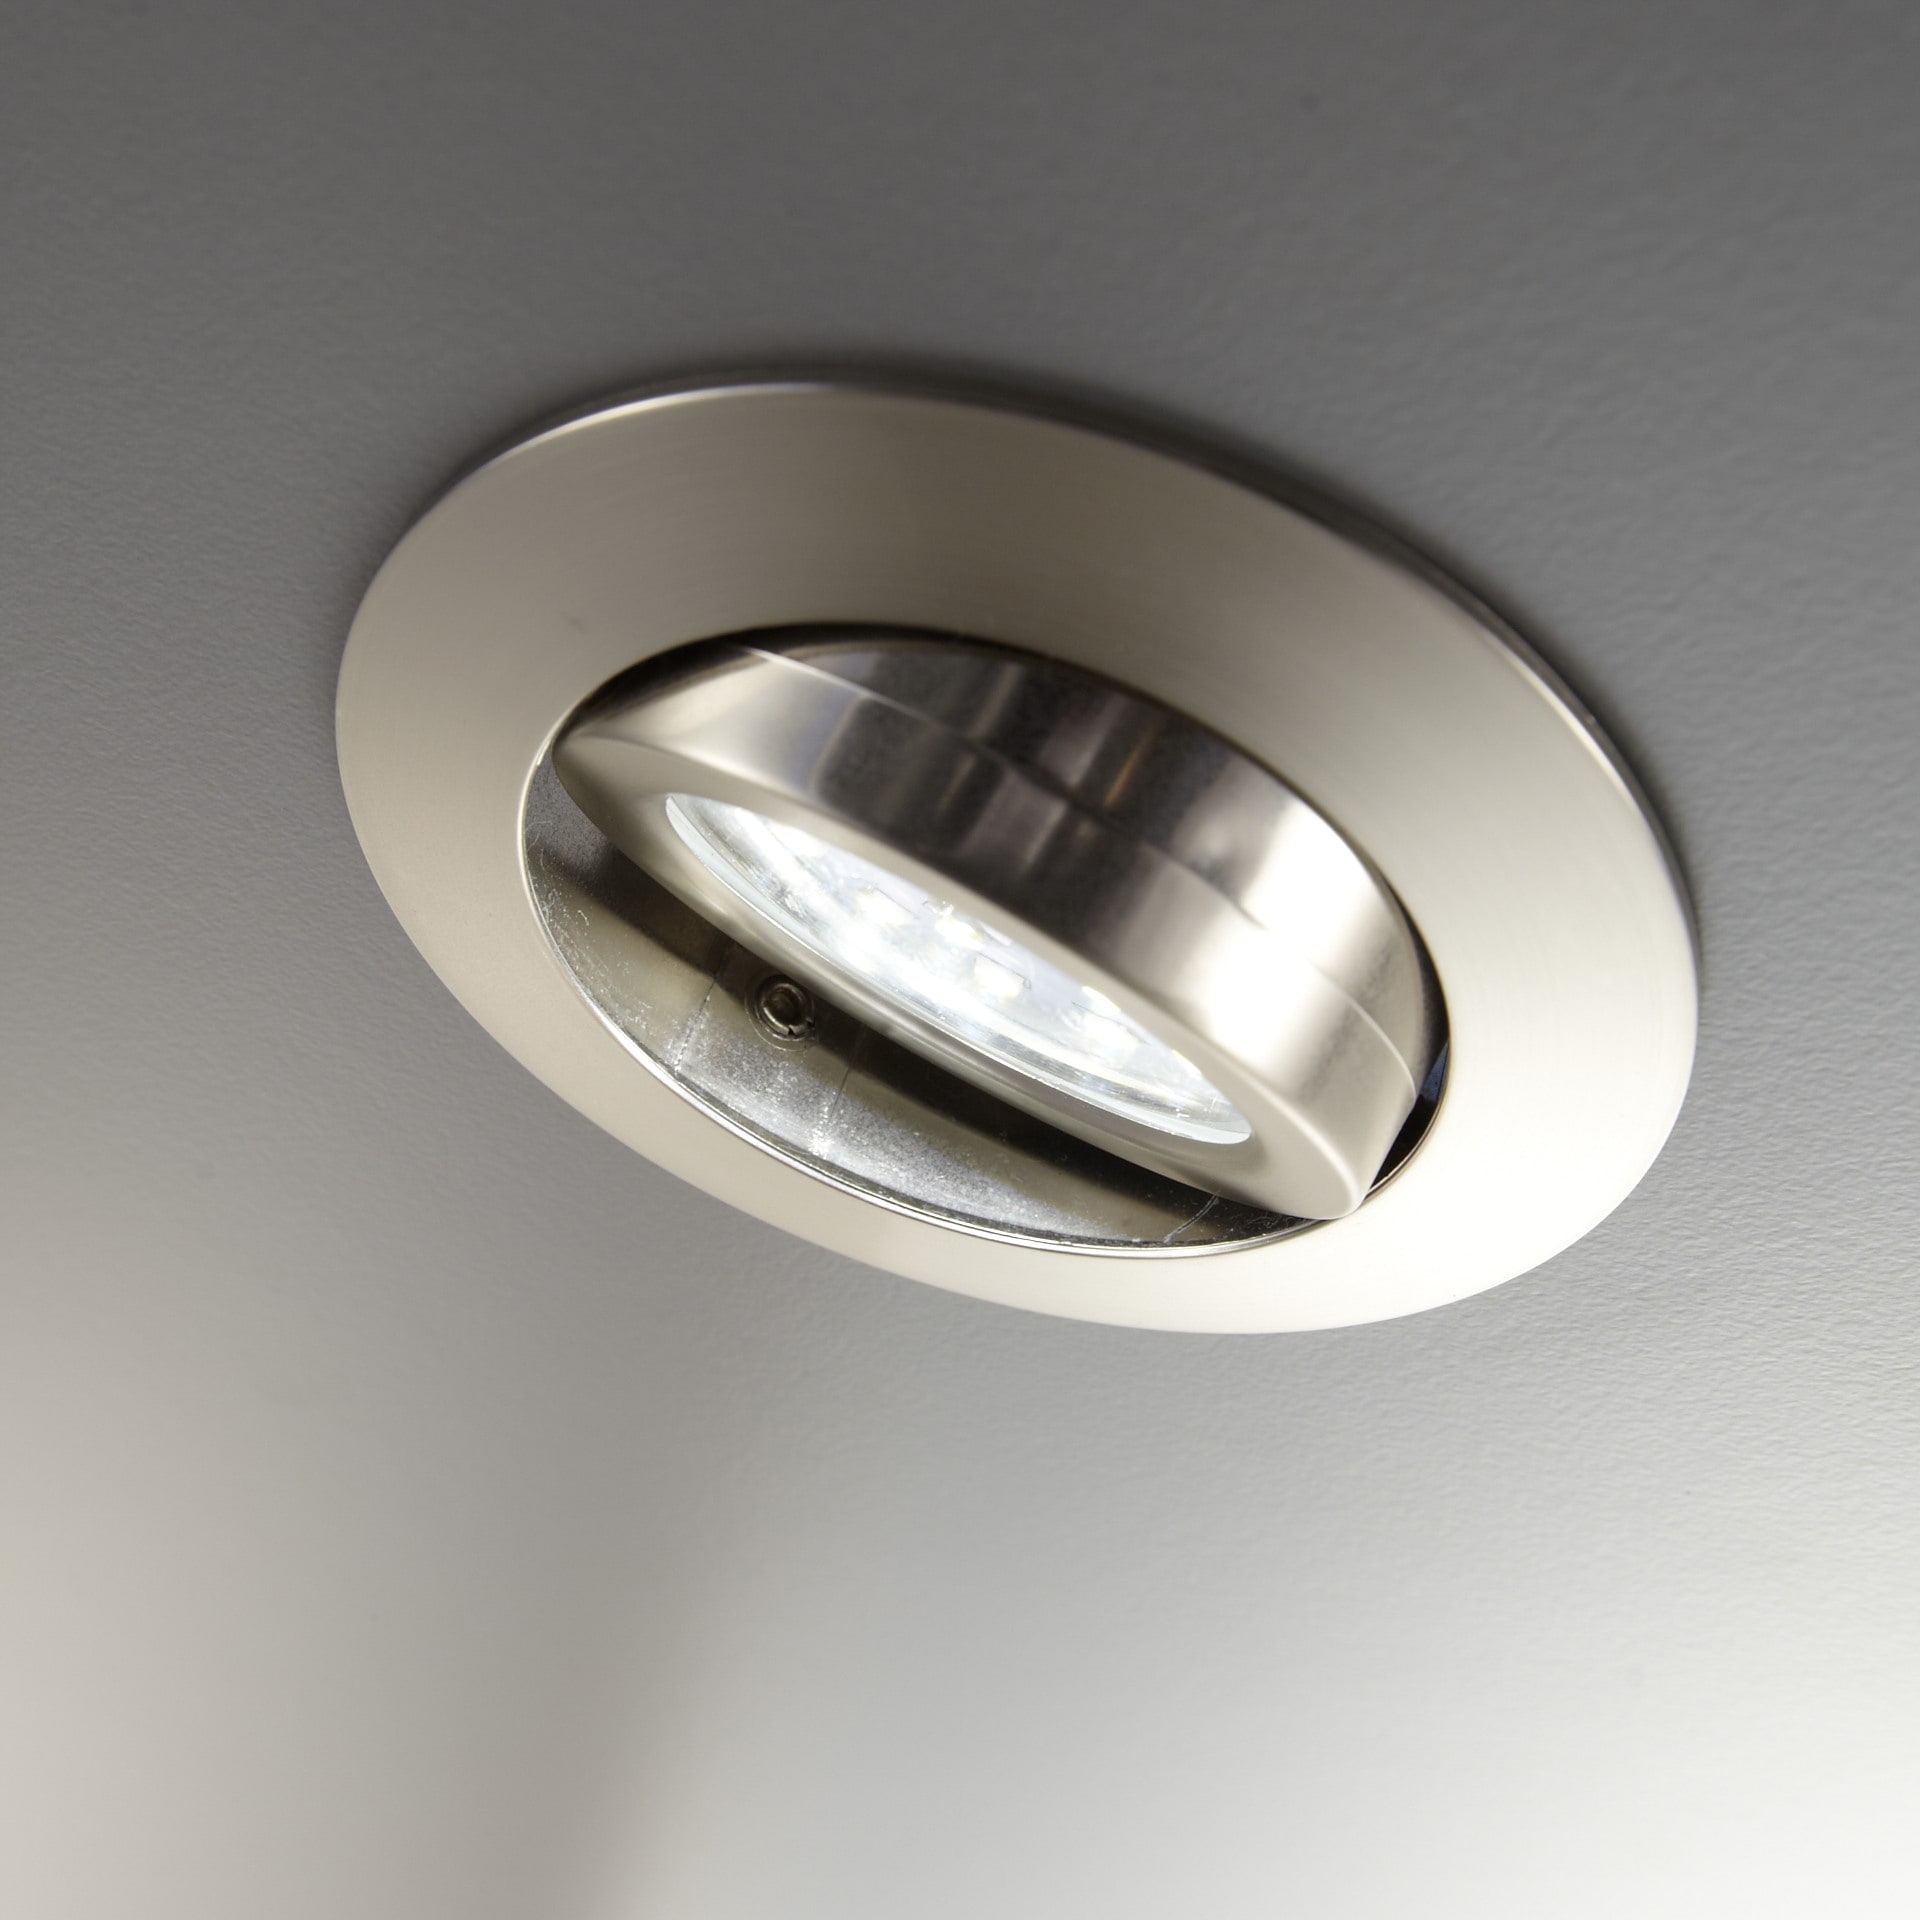 B.K.Licht LED Einbauleuchte »Kiro«, 12er-Set, Schutzart IP23, inkl. fest integr. LED-Leuchtmittel